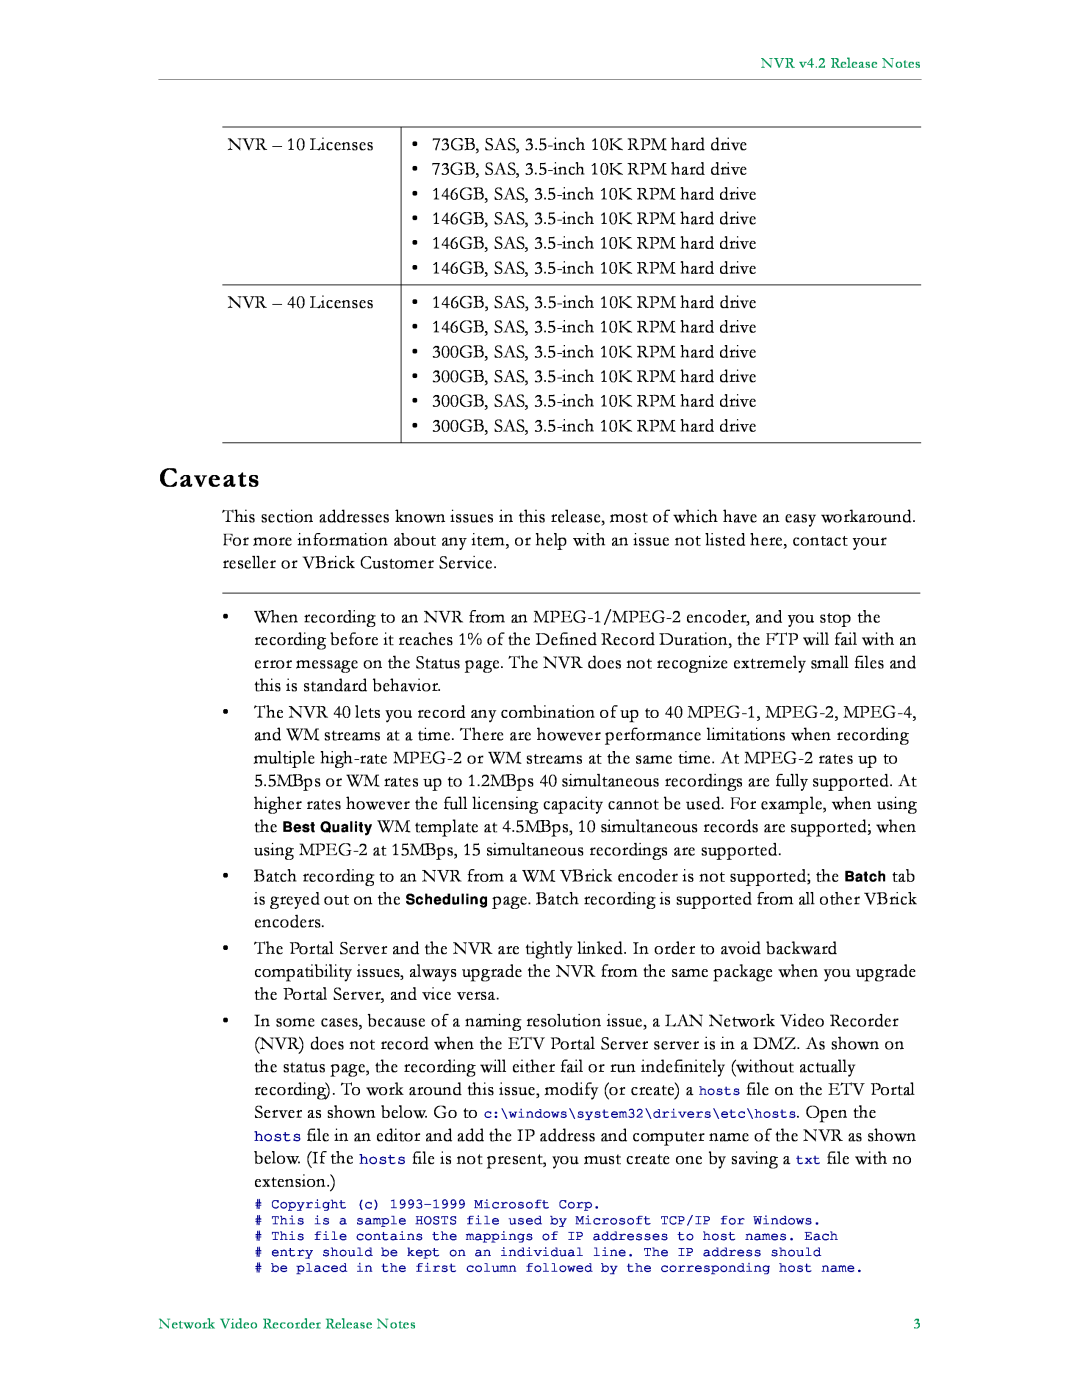 VBrick Systems EtherneTV NVR manual Caveats, # Copyright c 1993-1999 Microsoft Corp 